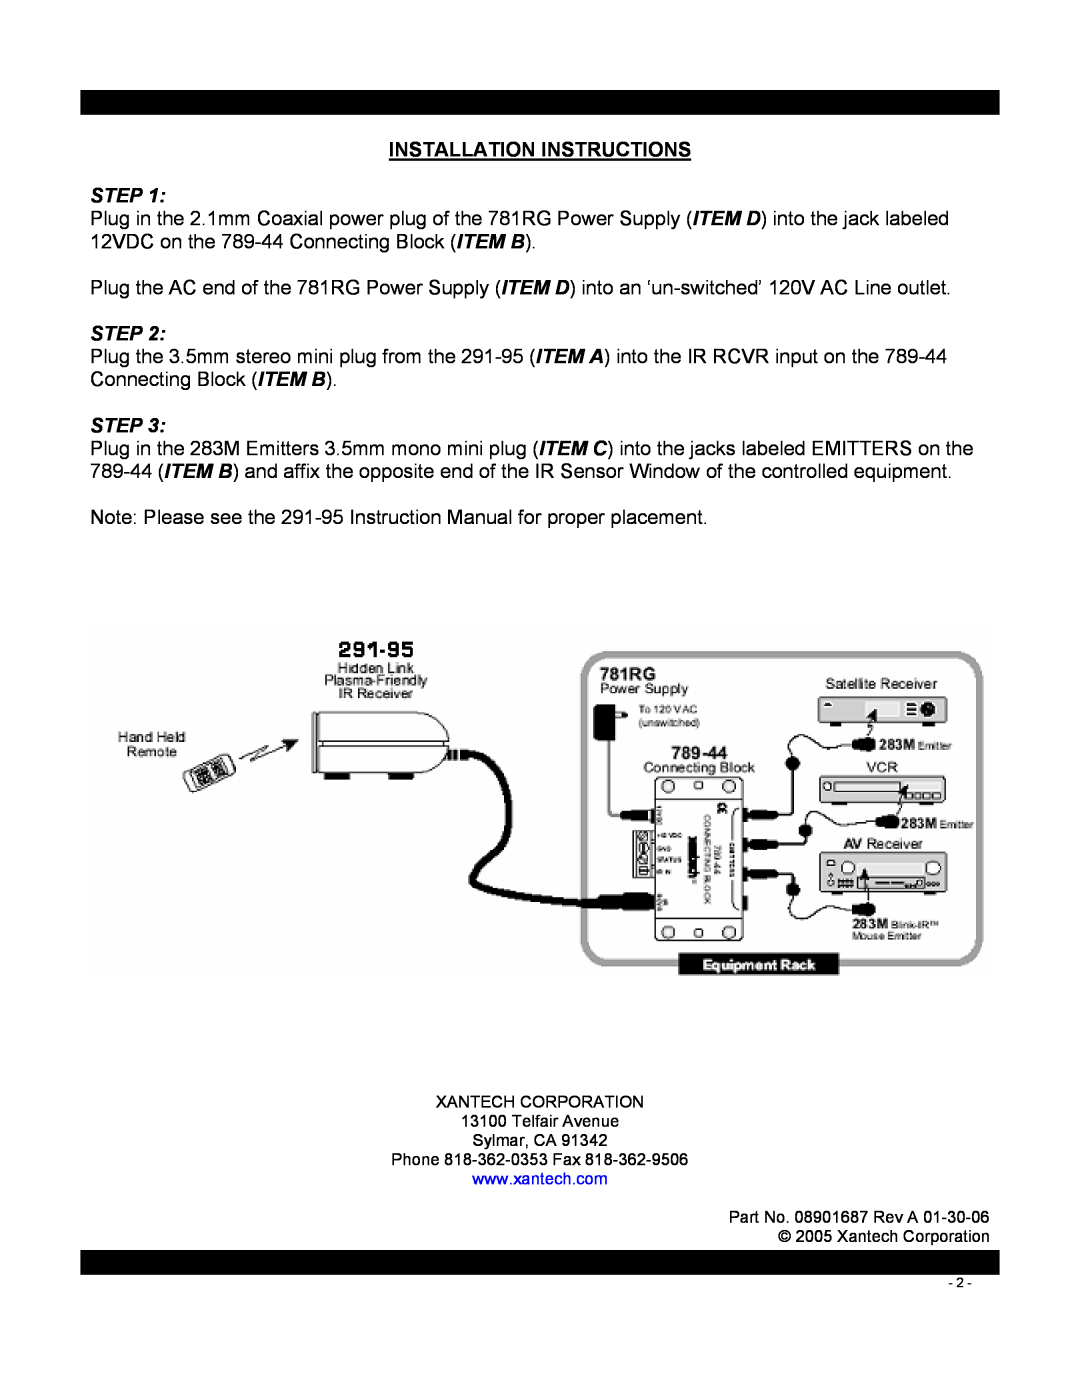 Xantech 291-95 KITRP manual Installation Instructions, Step 